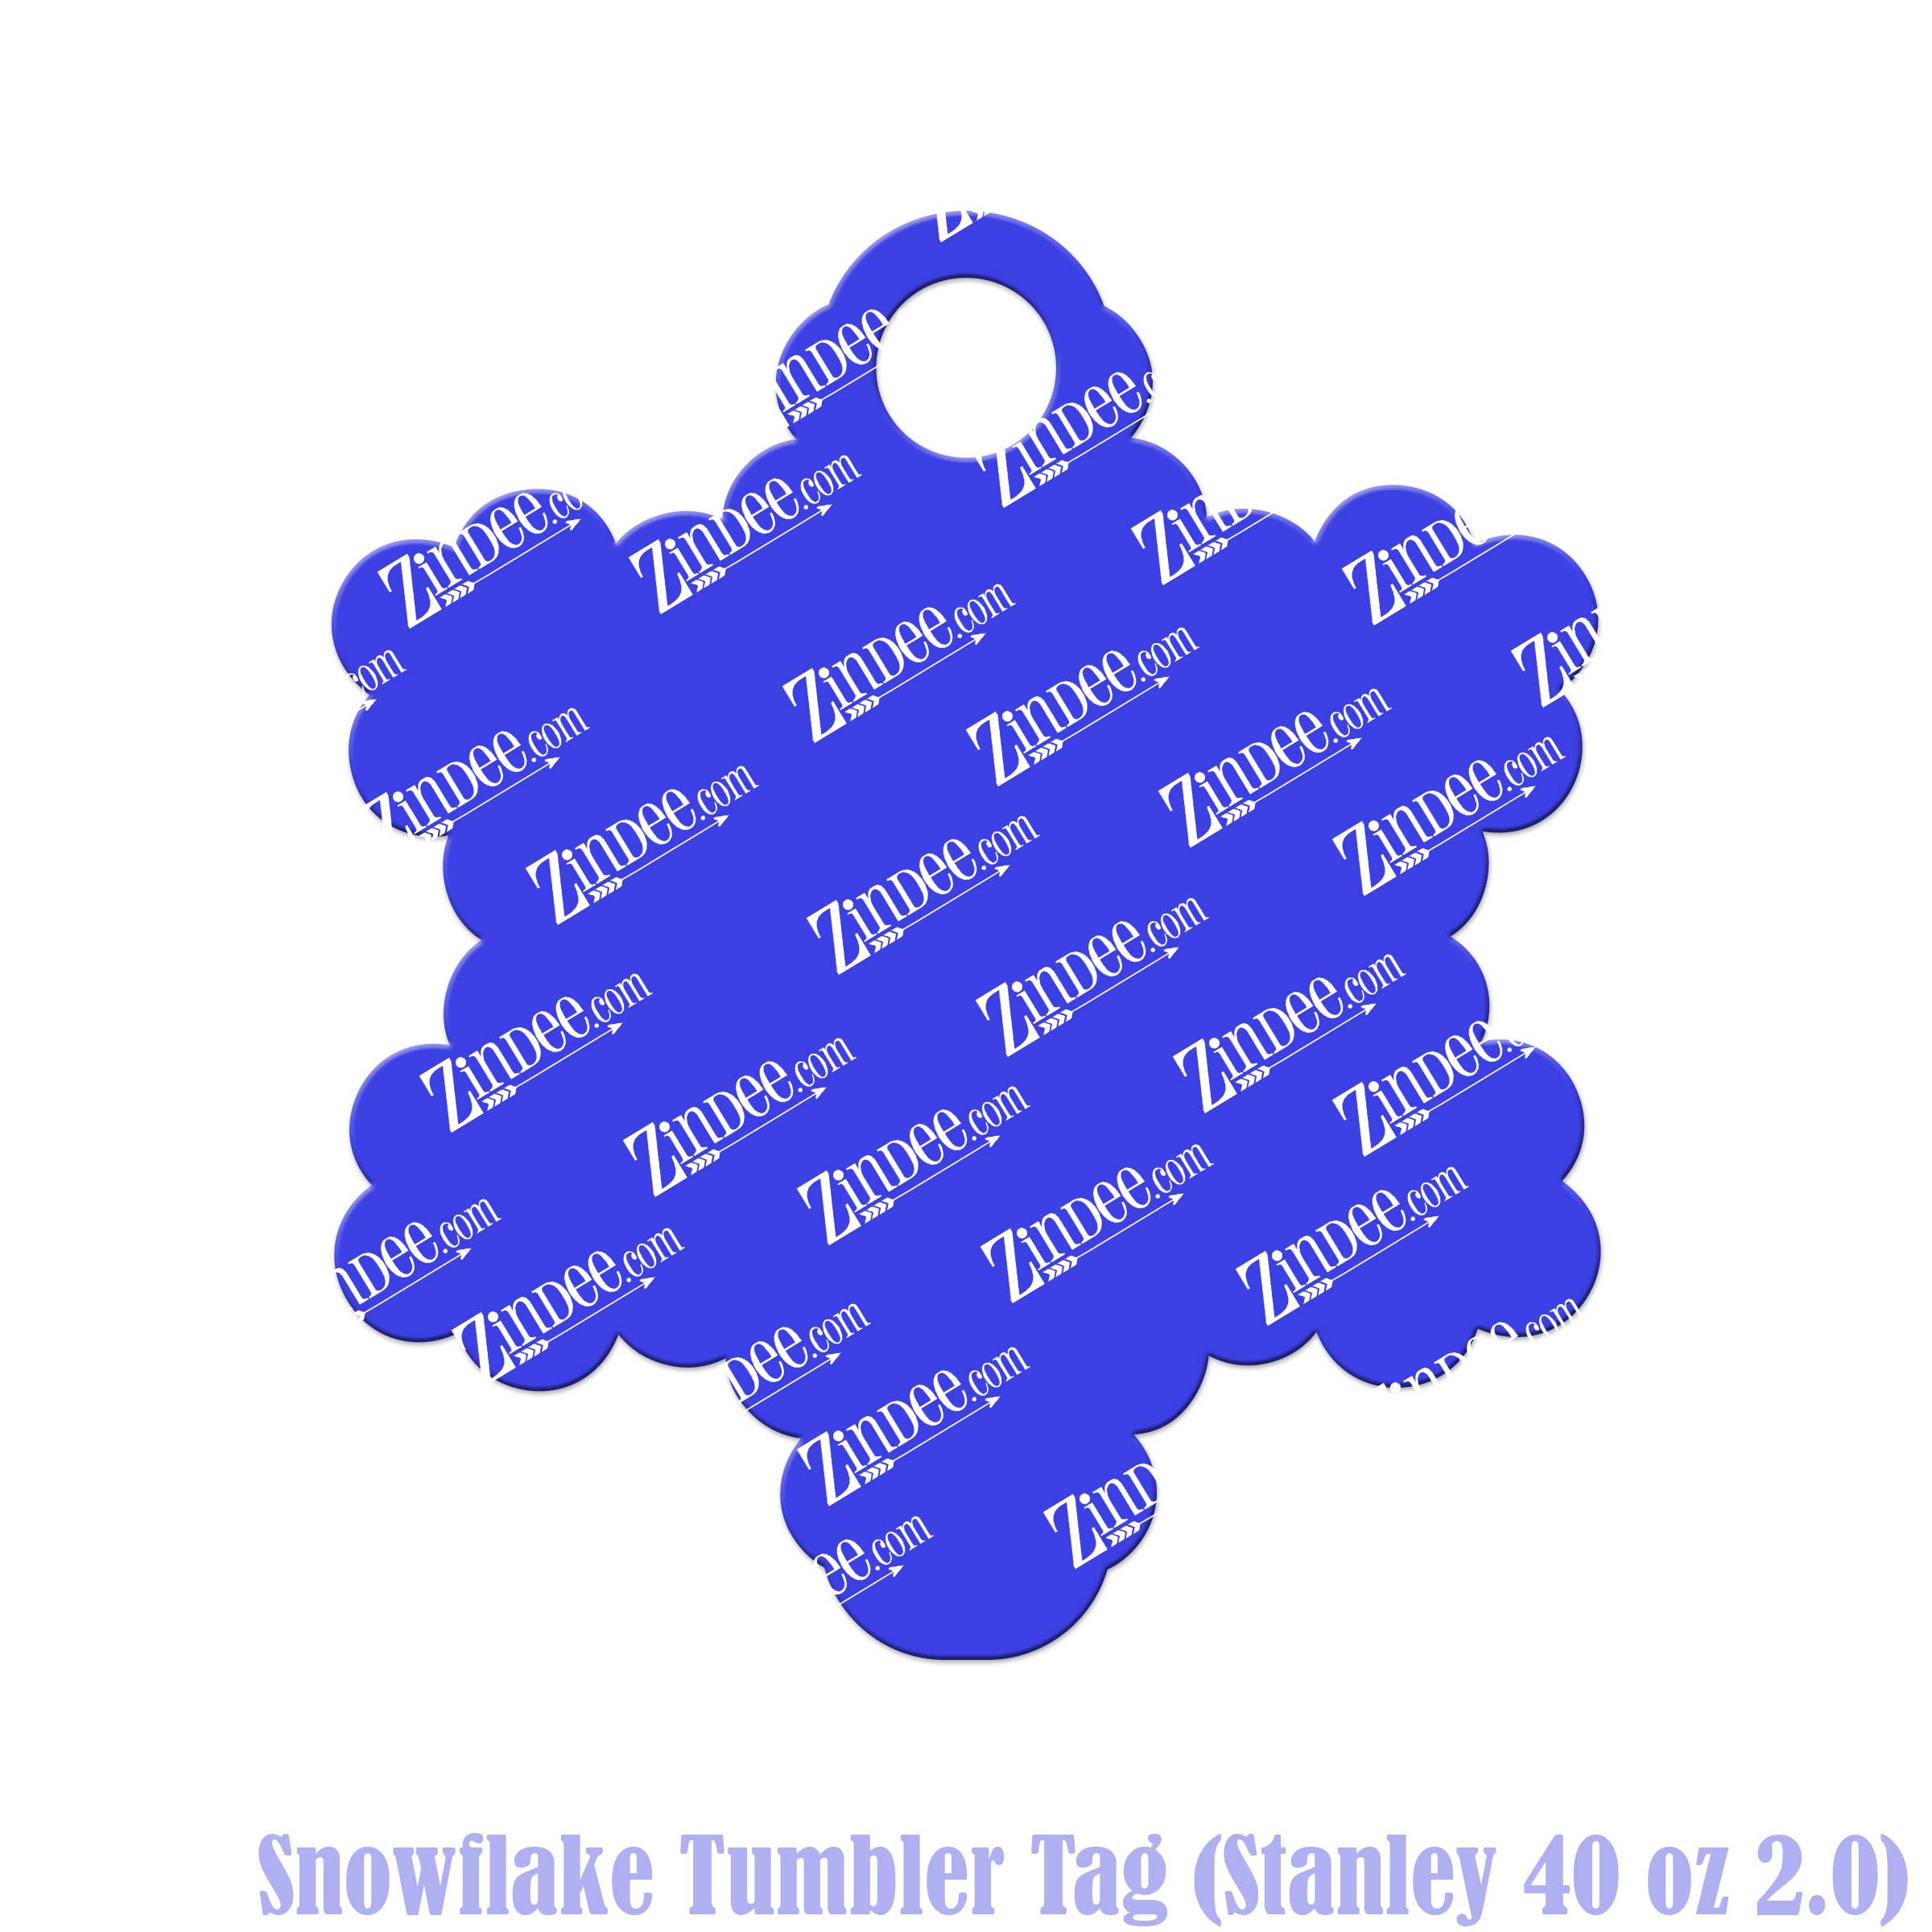 Heart Tumbler Tag (Stanley 40 oz)